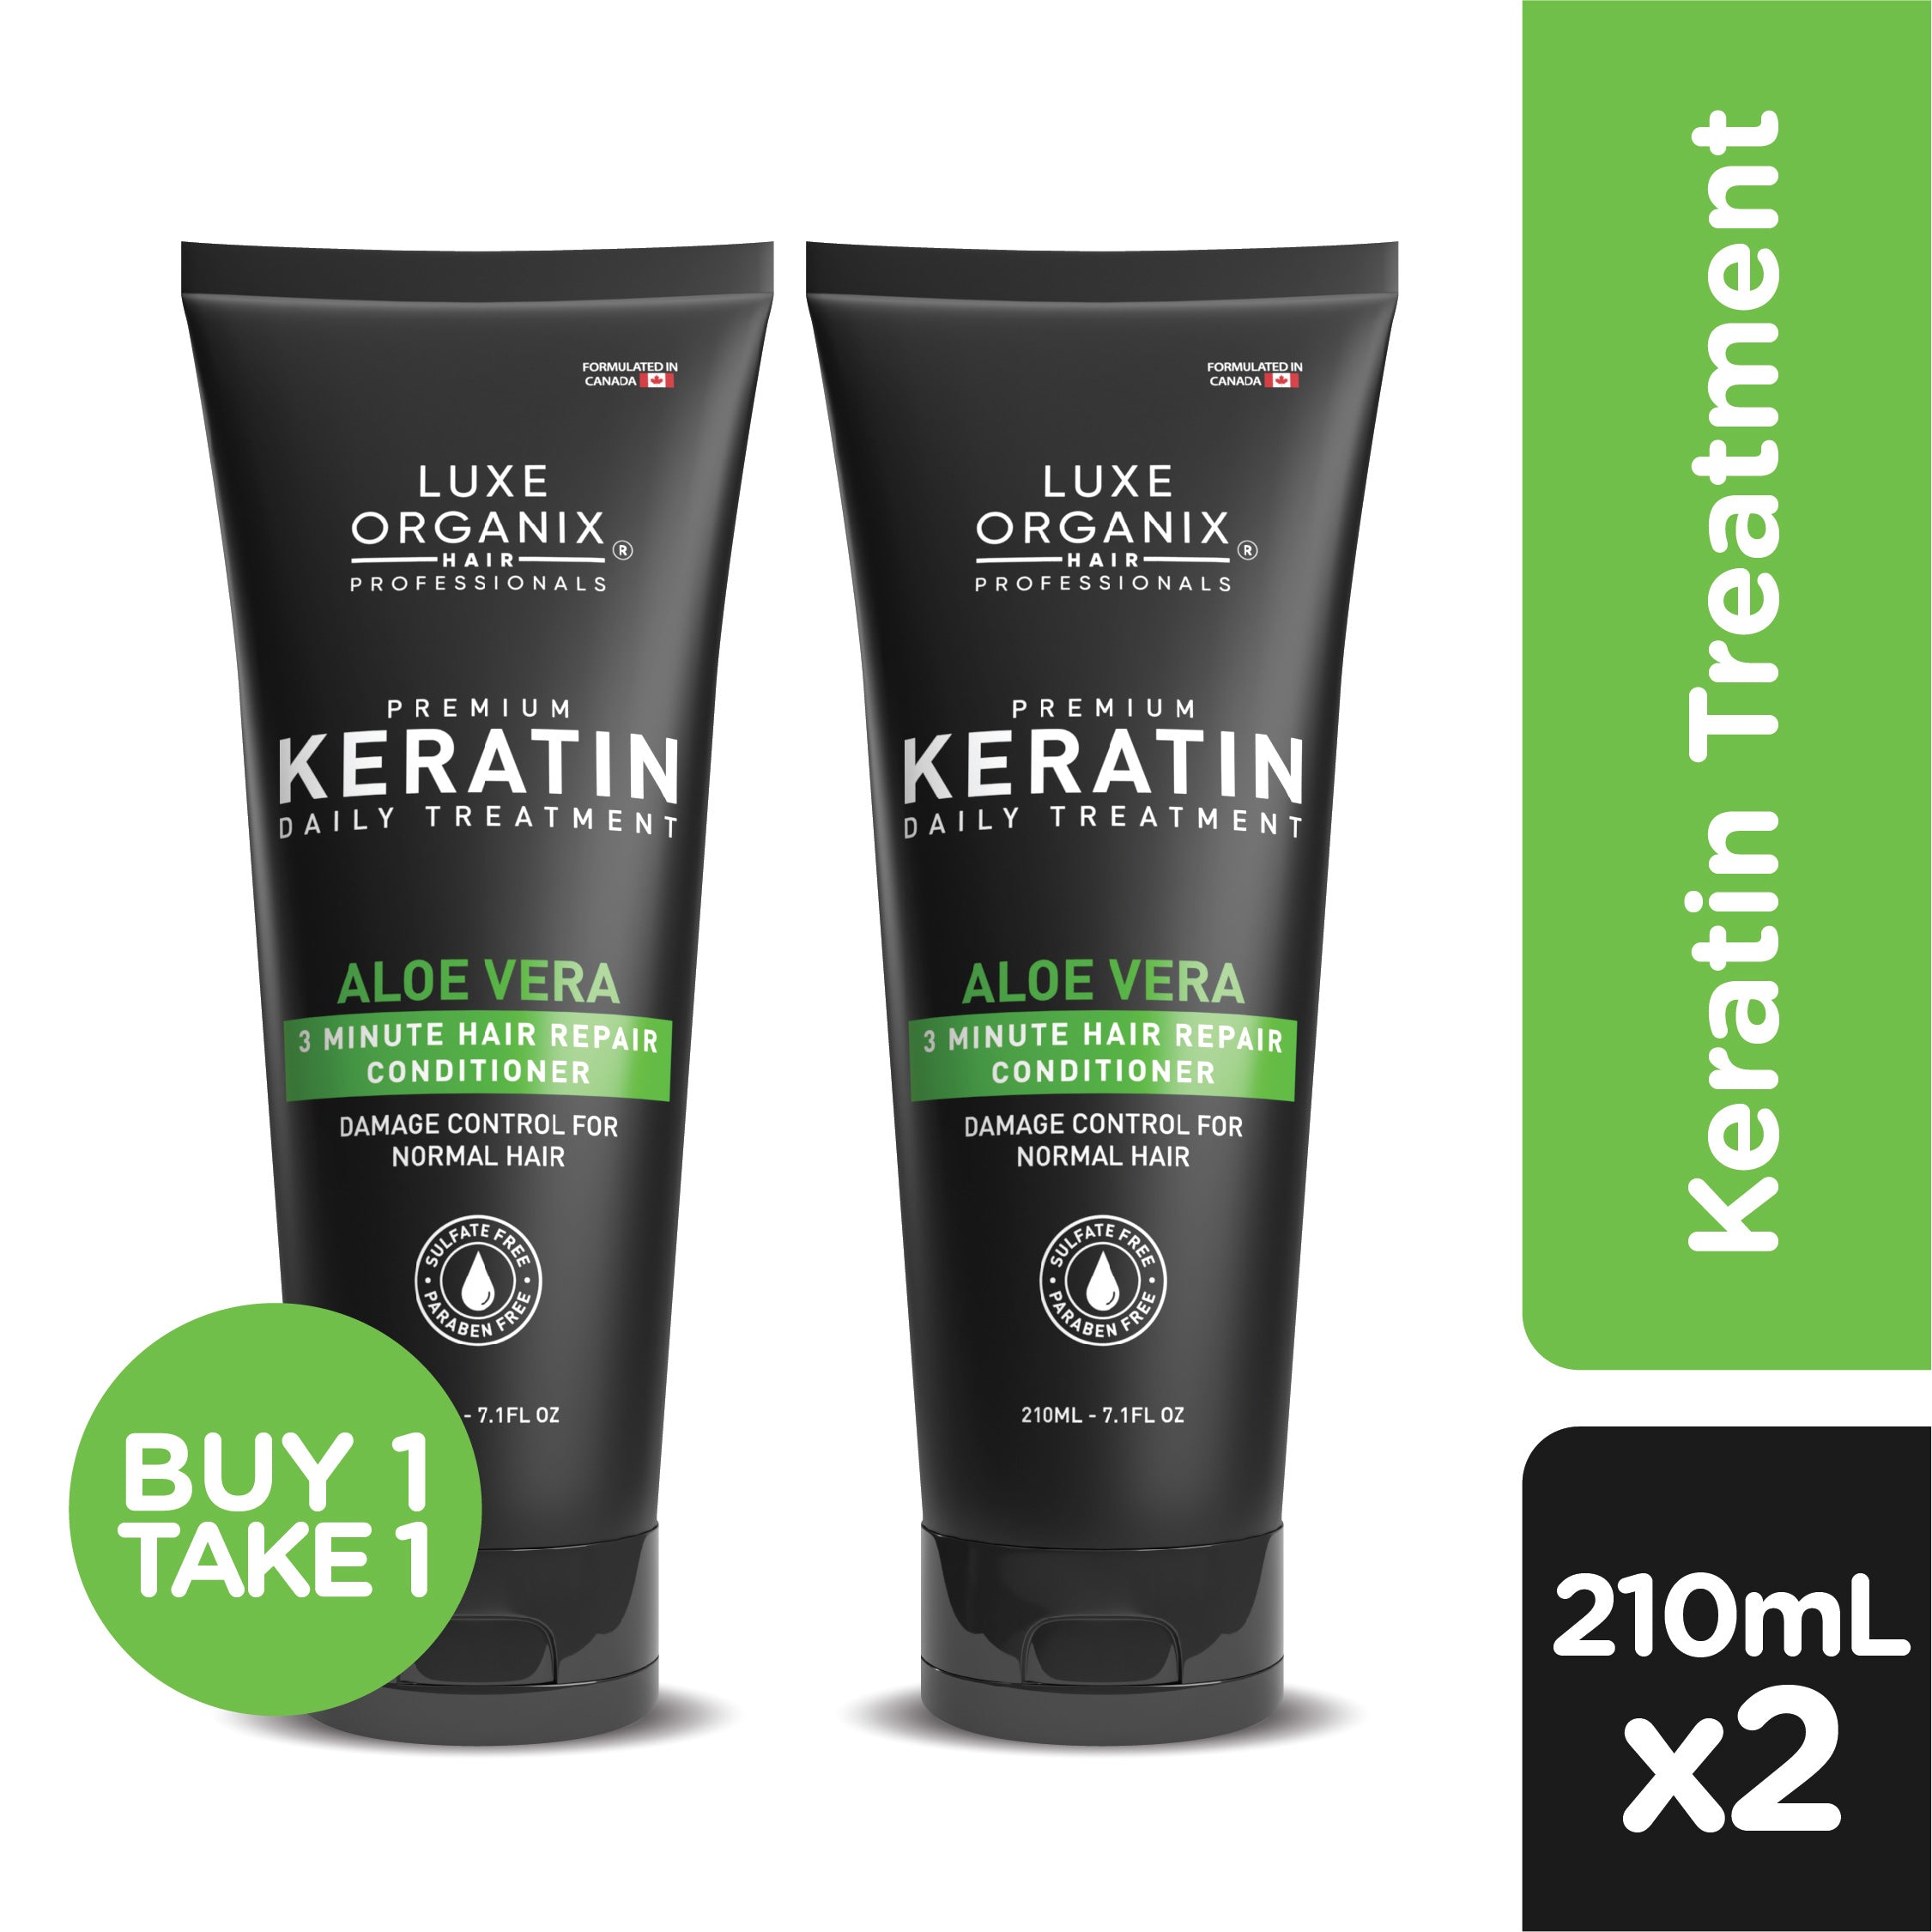 Premium Keratin Treatment 210ml (B1T1) - Aloe Vera